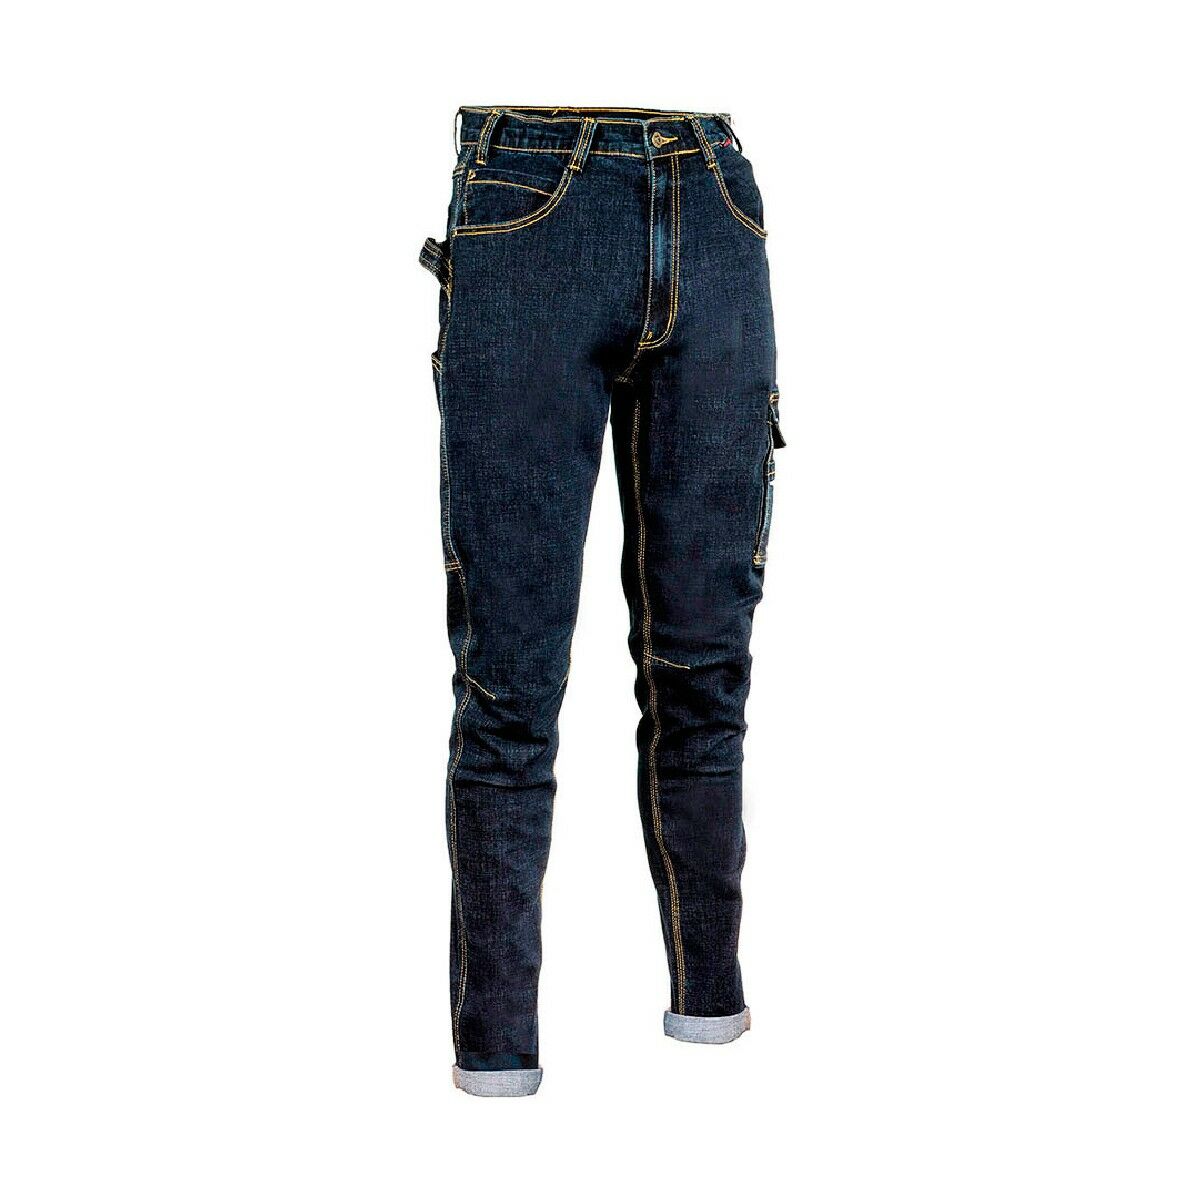 Pantaloni de siguranță Cofra Cabries Profesionist Bleumarin - Mărime 48